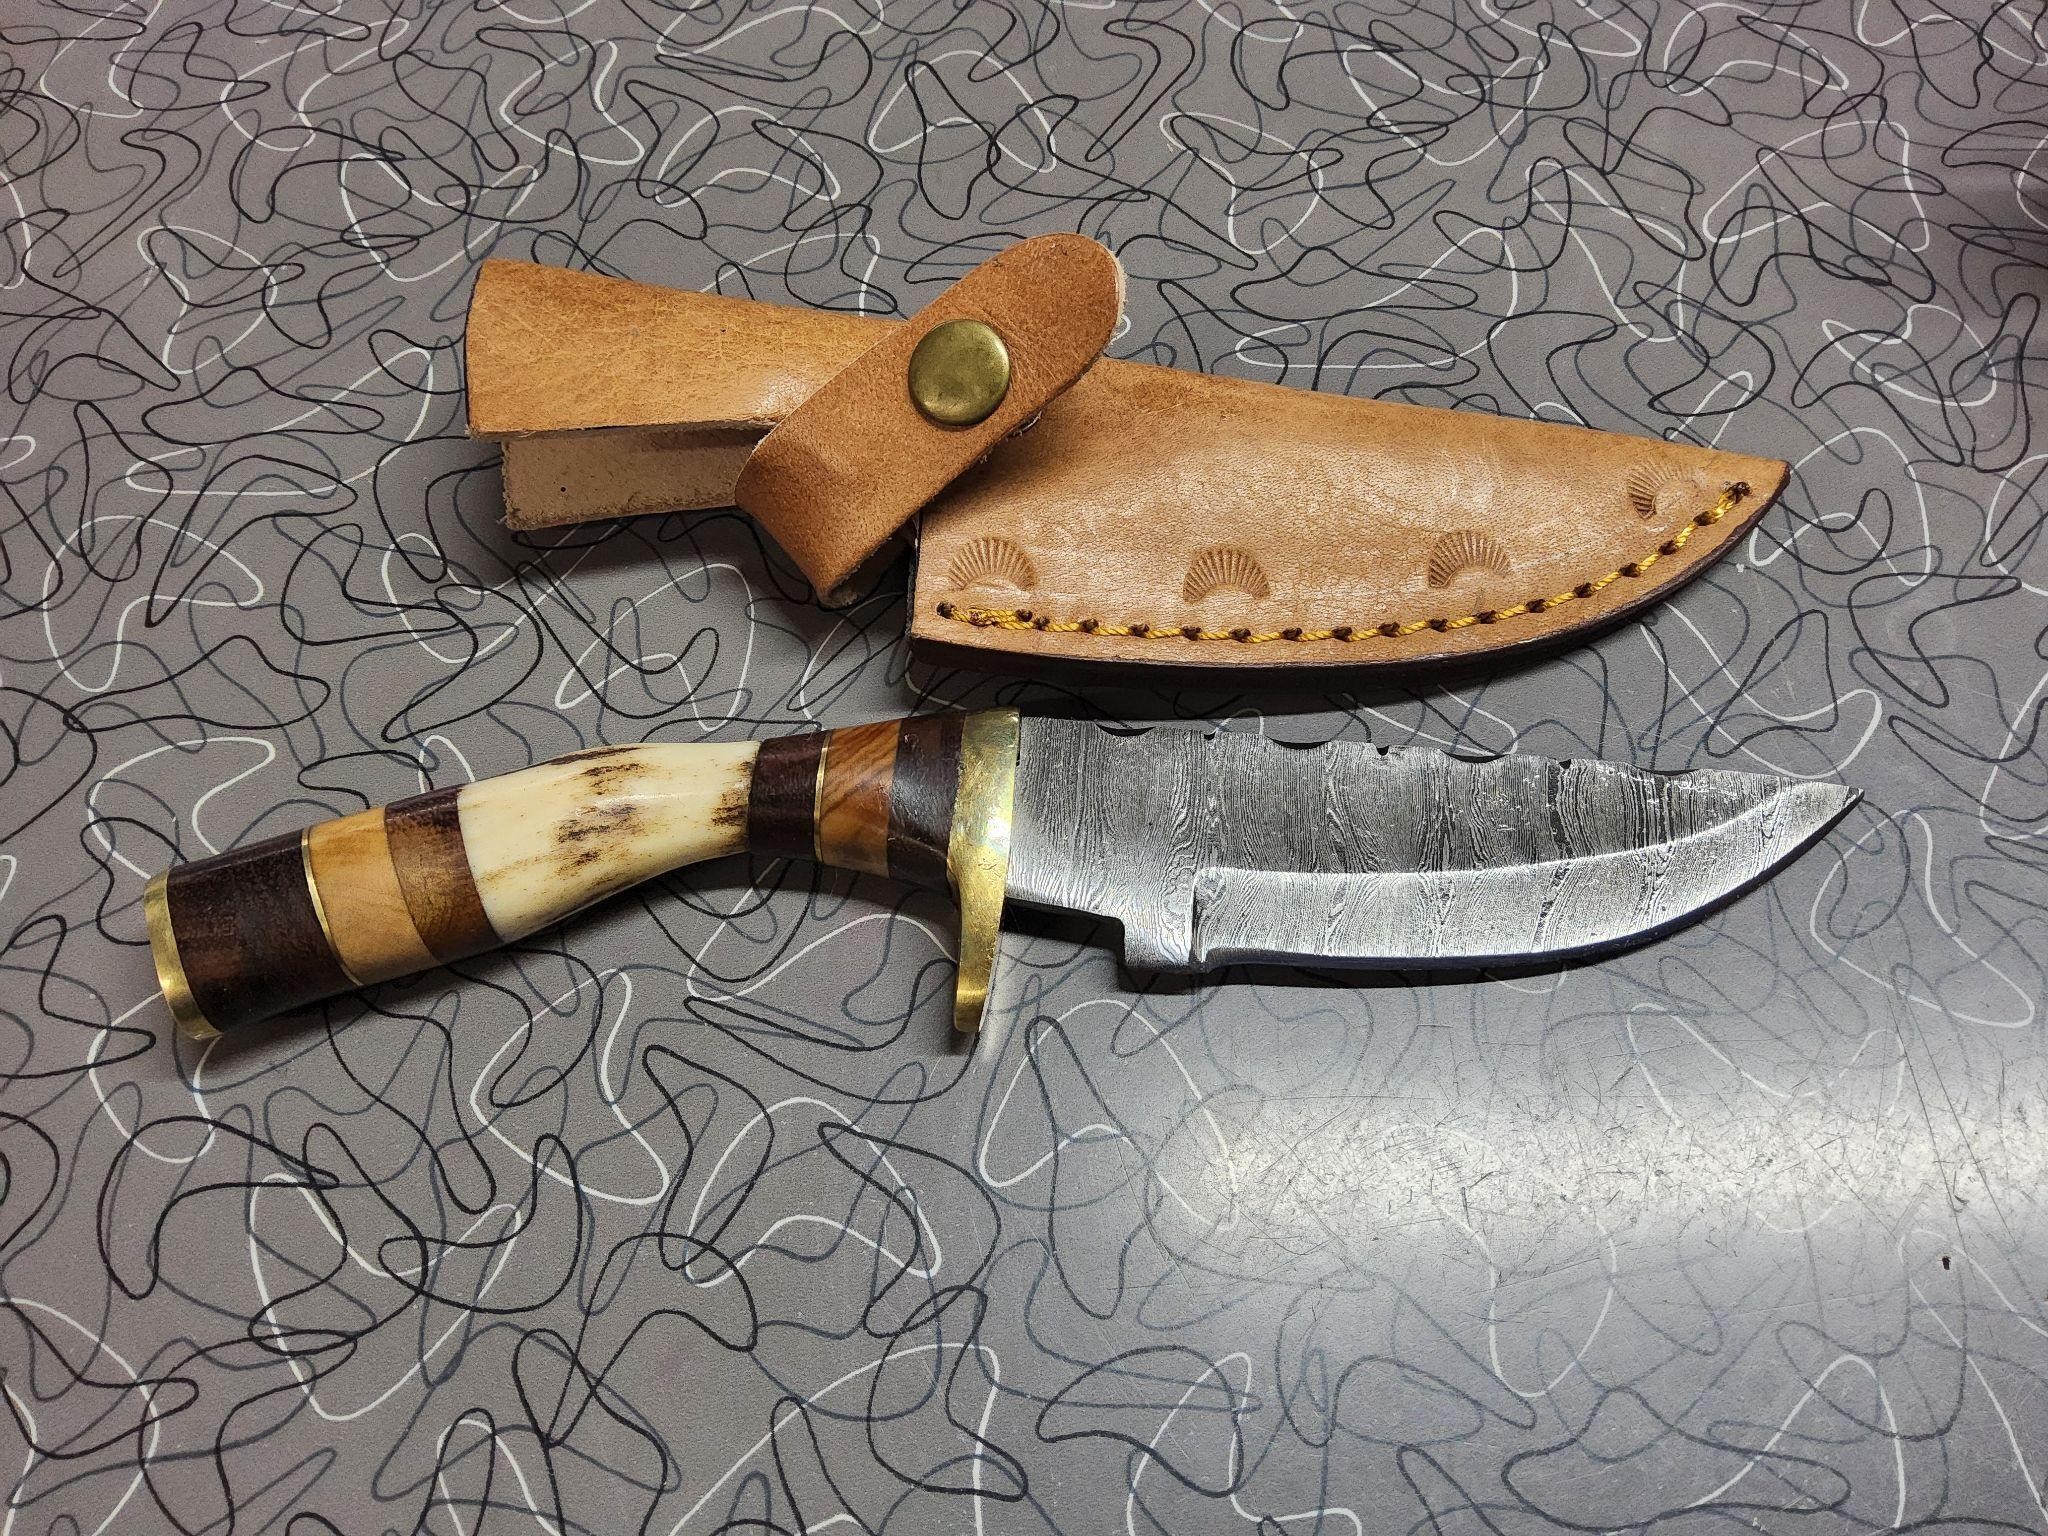 Damascus Blade hunting knife